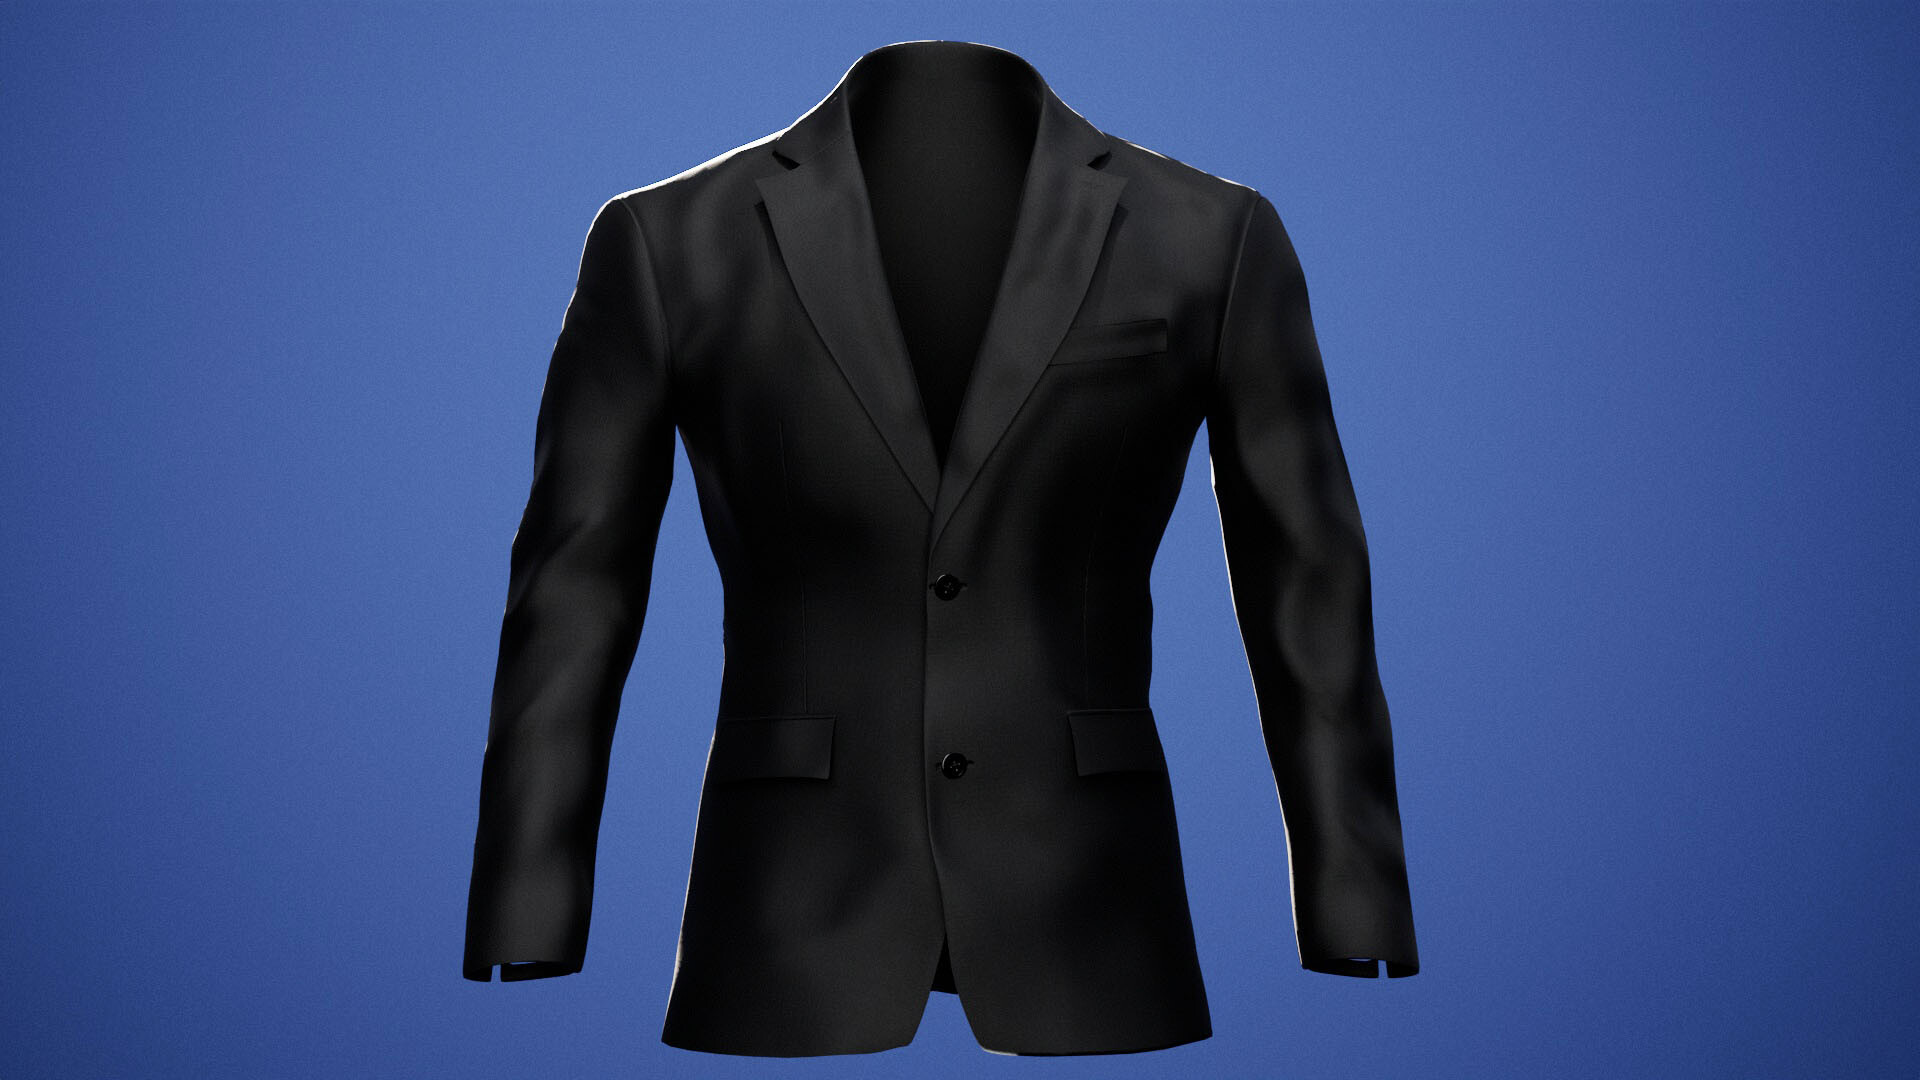 ArtStation - Suit Jacket Low poly